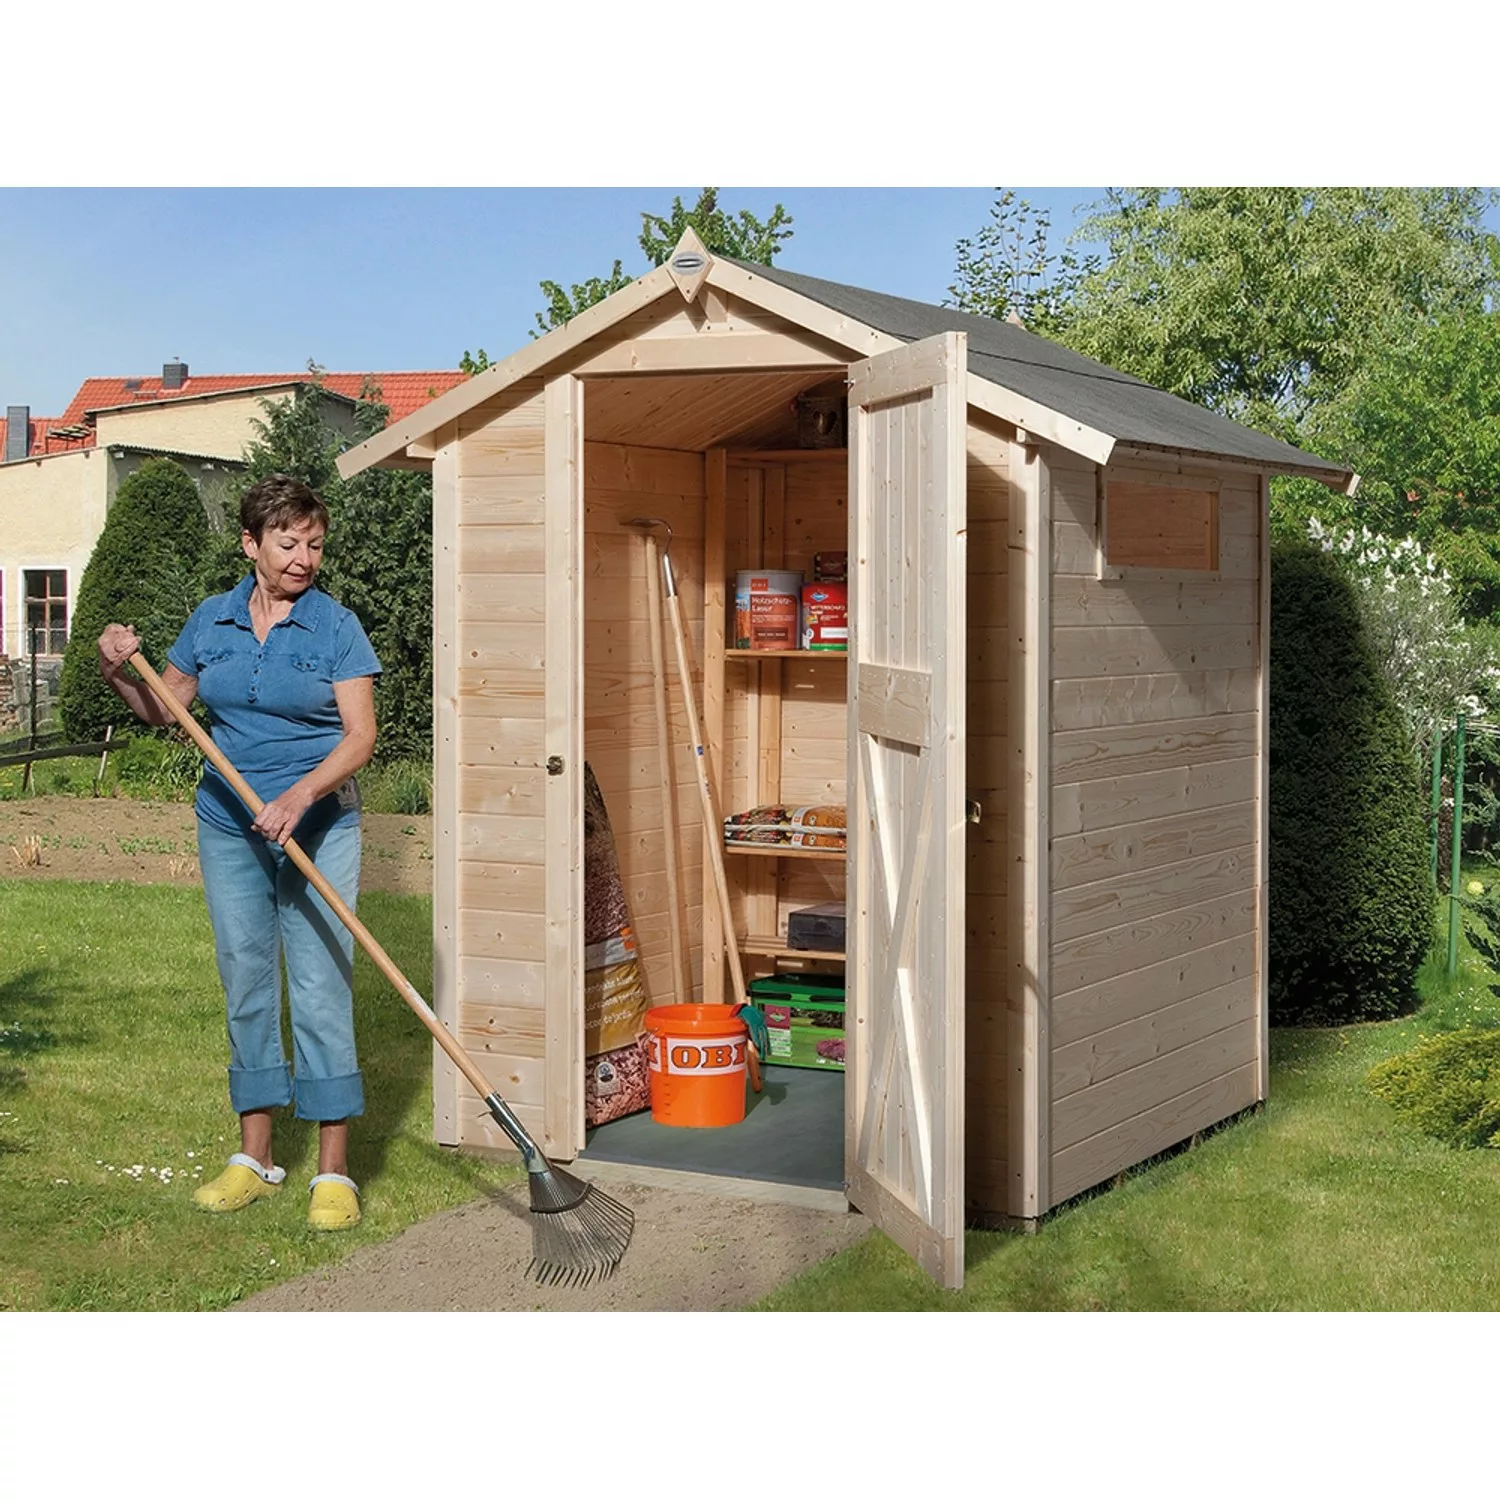 OBI Outdoor Living Holz-Gartenhaus Kompakt Satteldach 152 cm x 171 cm günstig online kaufen